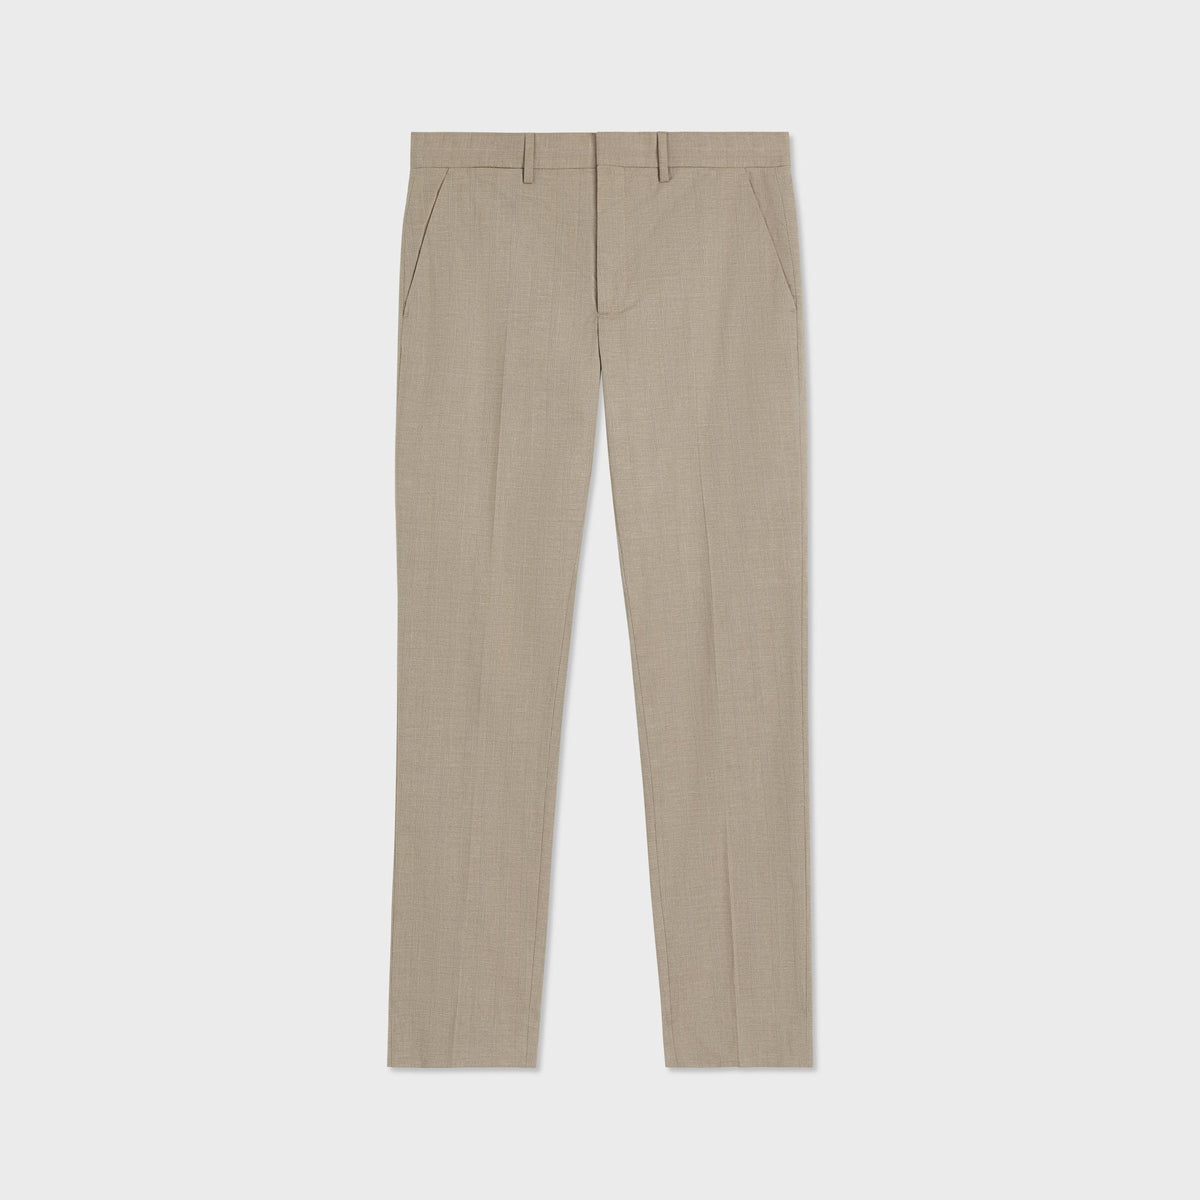 Khaki Check - Everyday Men's Custom Fit Chino Pants - SPOKE - SPOKE